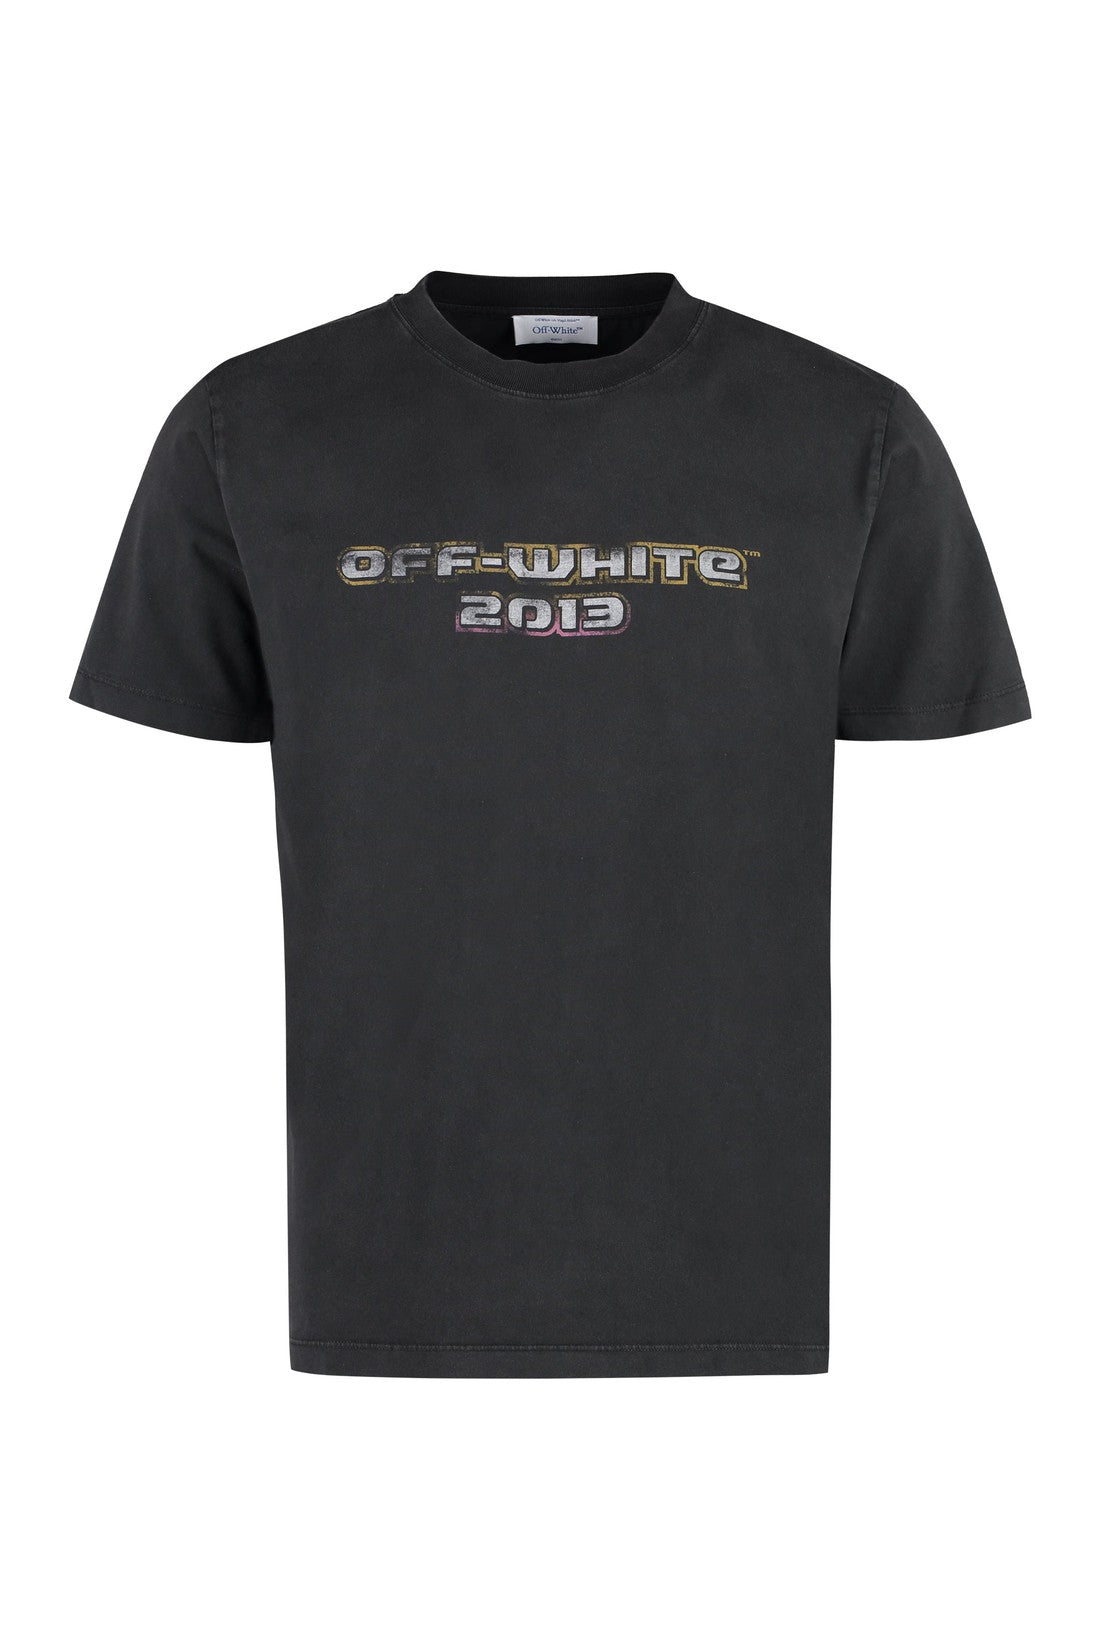 Off-White-OUTLET-SALE-Printed cotton T-shirt-ARCHIVIST